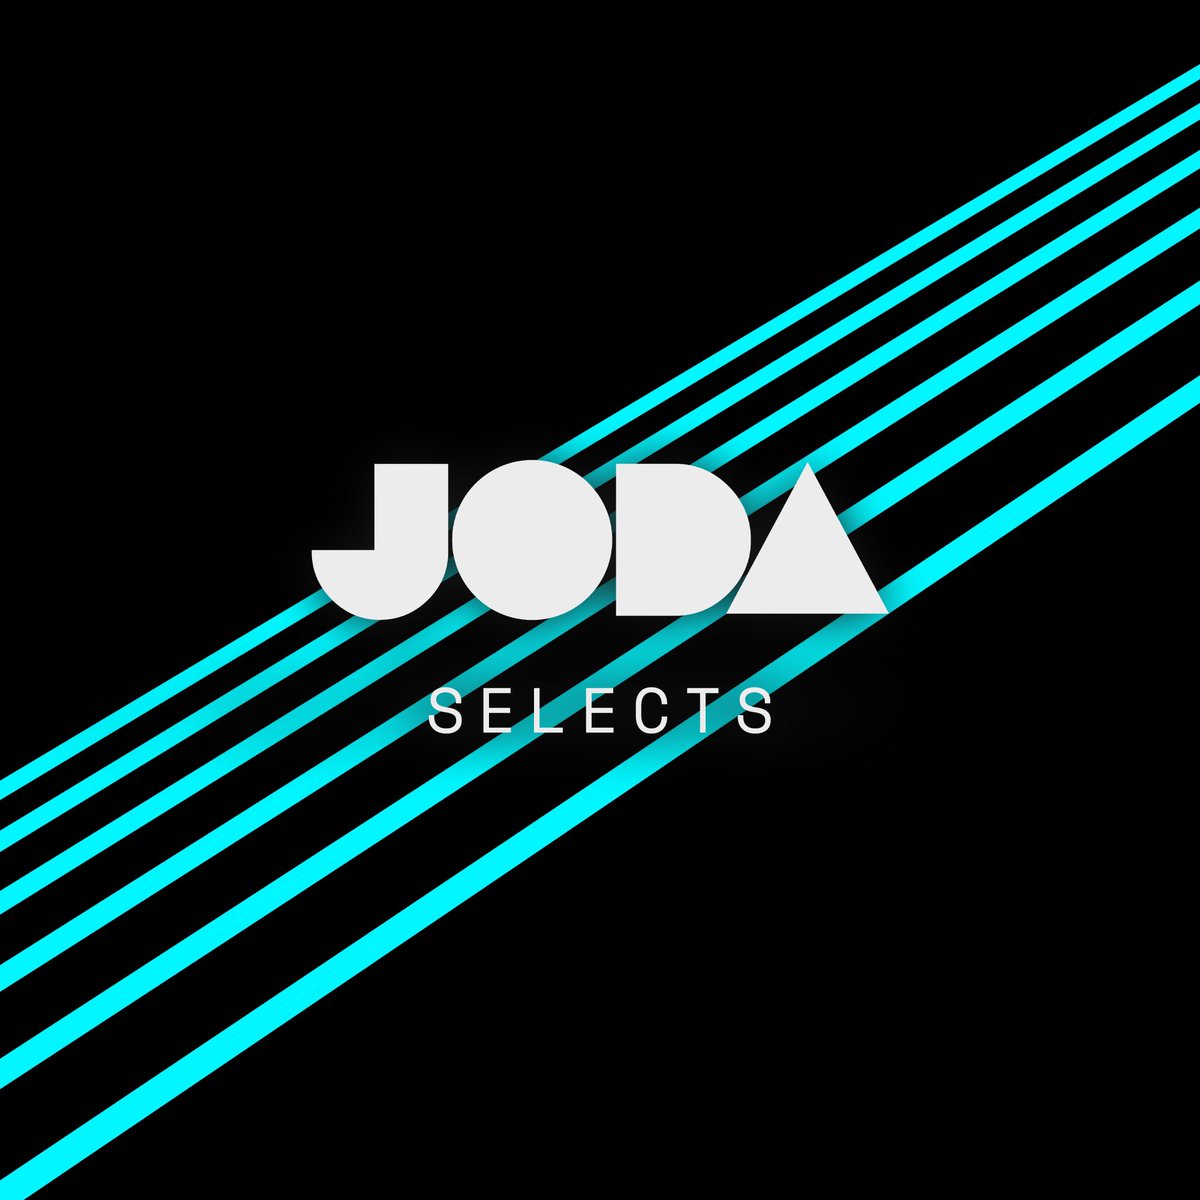 Our latest @JODA_music playlist is now live on @Spotify open.spotify.com/playlist/7vqcC…